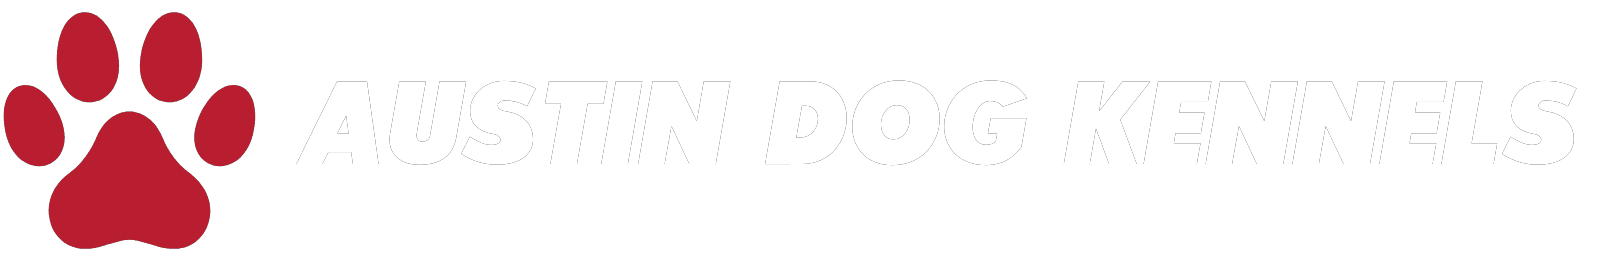 Austin Dog Kennels (1600 × 600 px) (1)